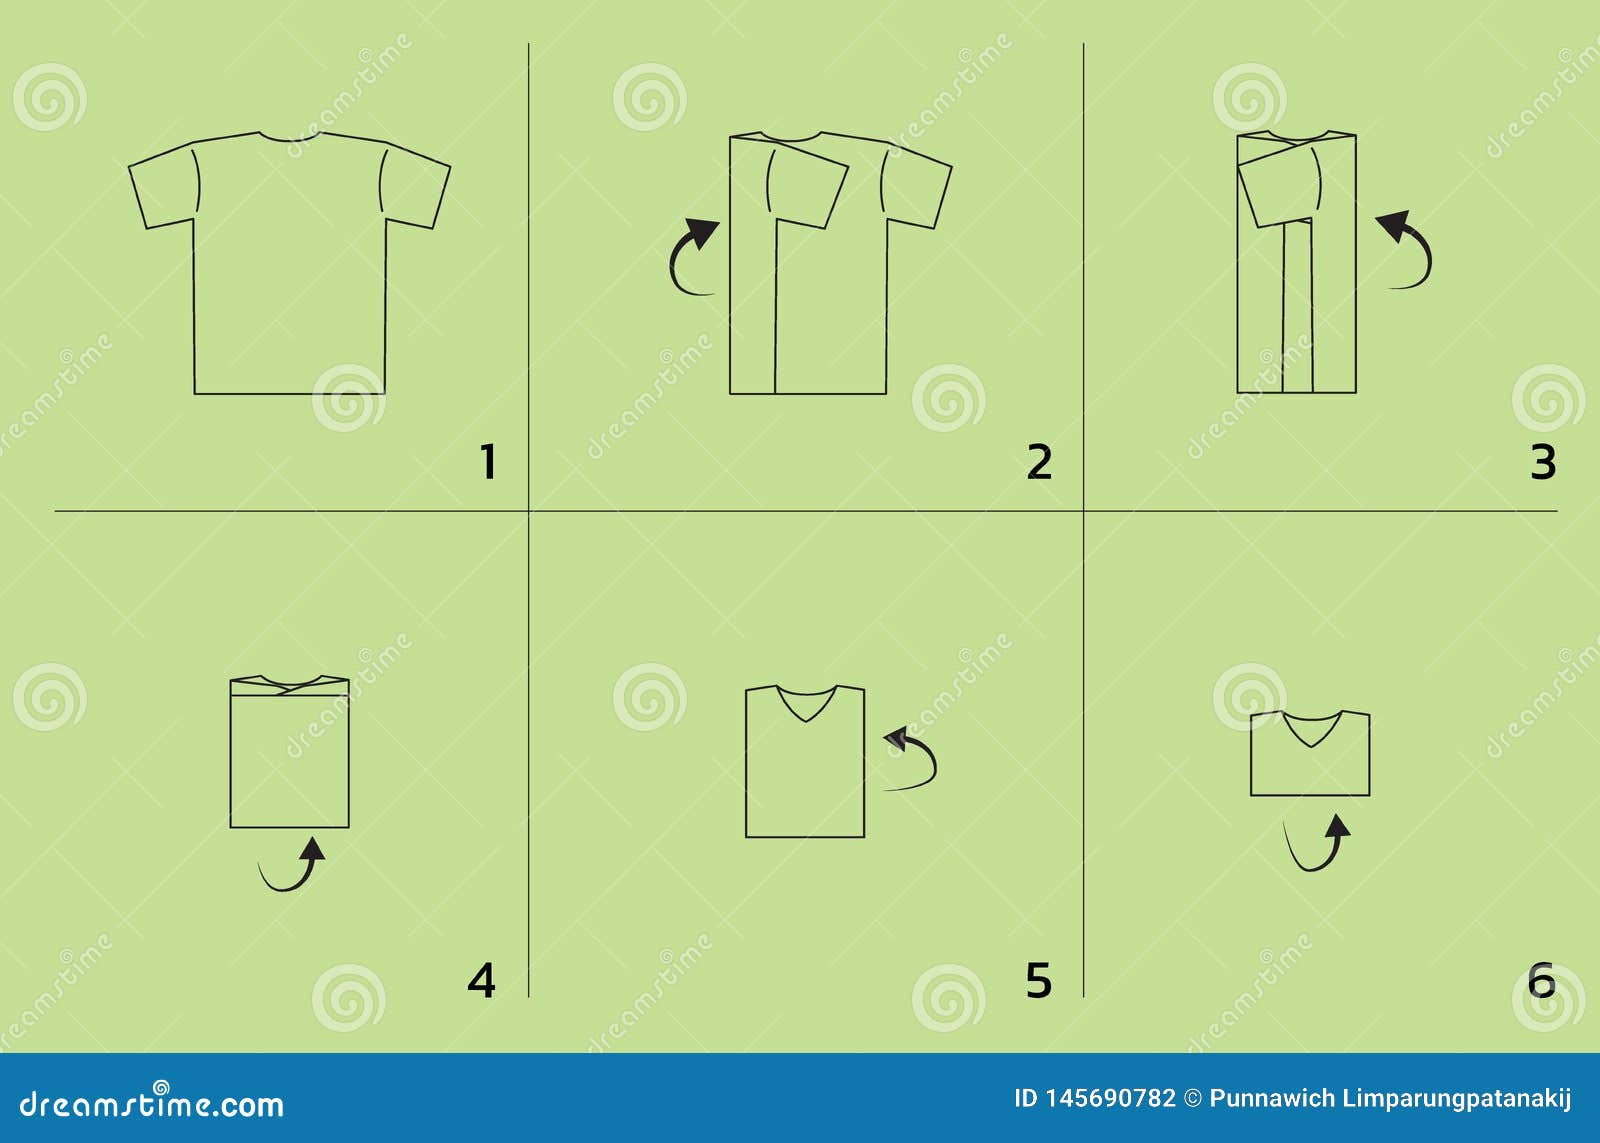 Download Shirt Folding Tutorial Sequence Cartoon Vector ...